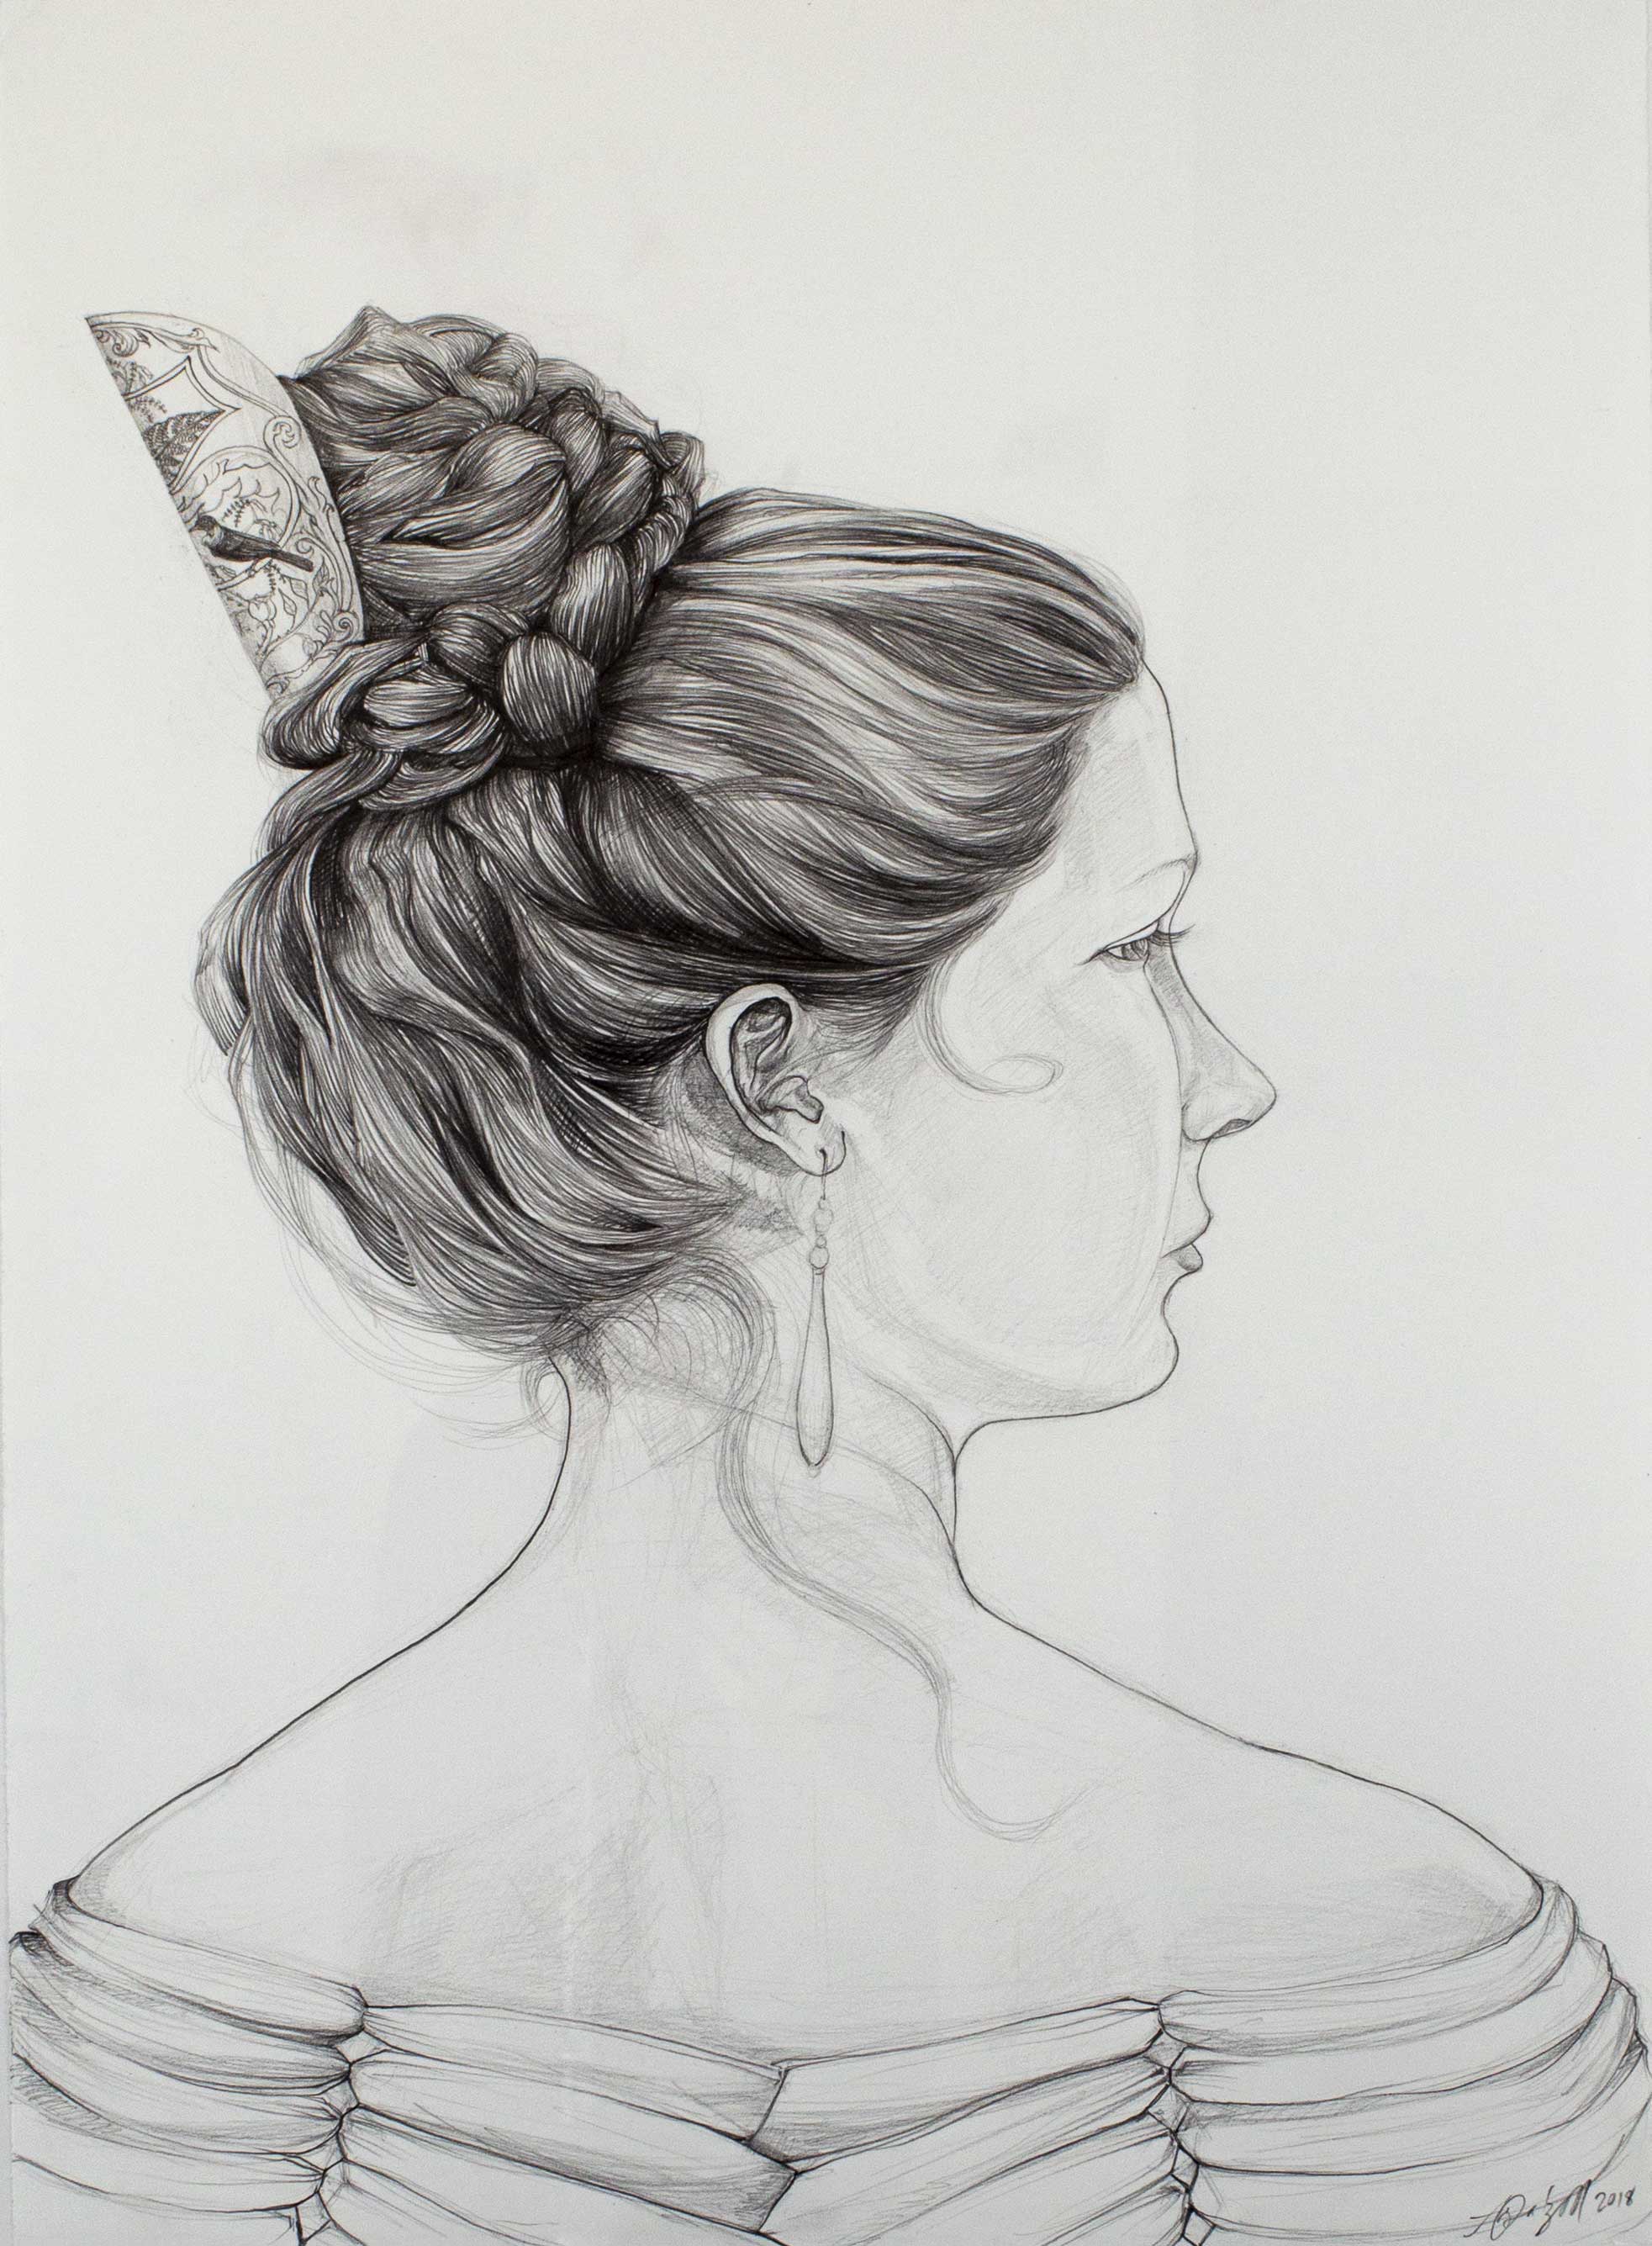 DETAIL: Anna Dalzell - Silhouette Portrait